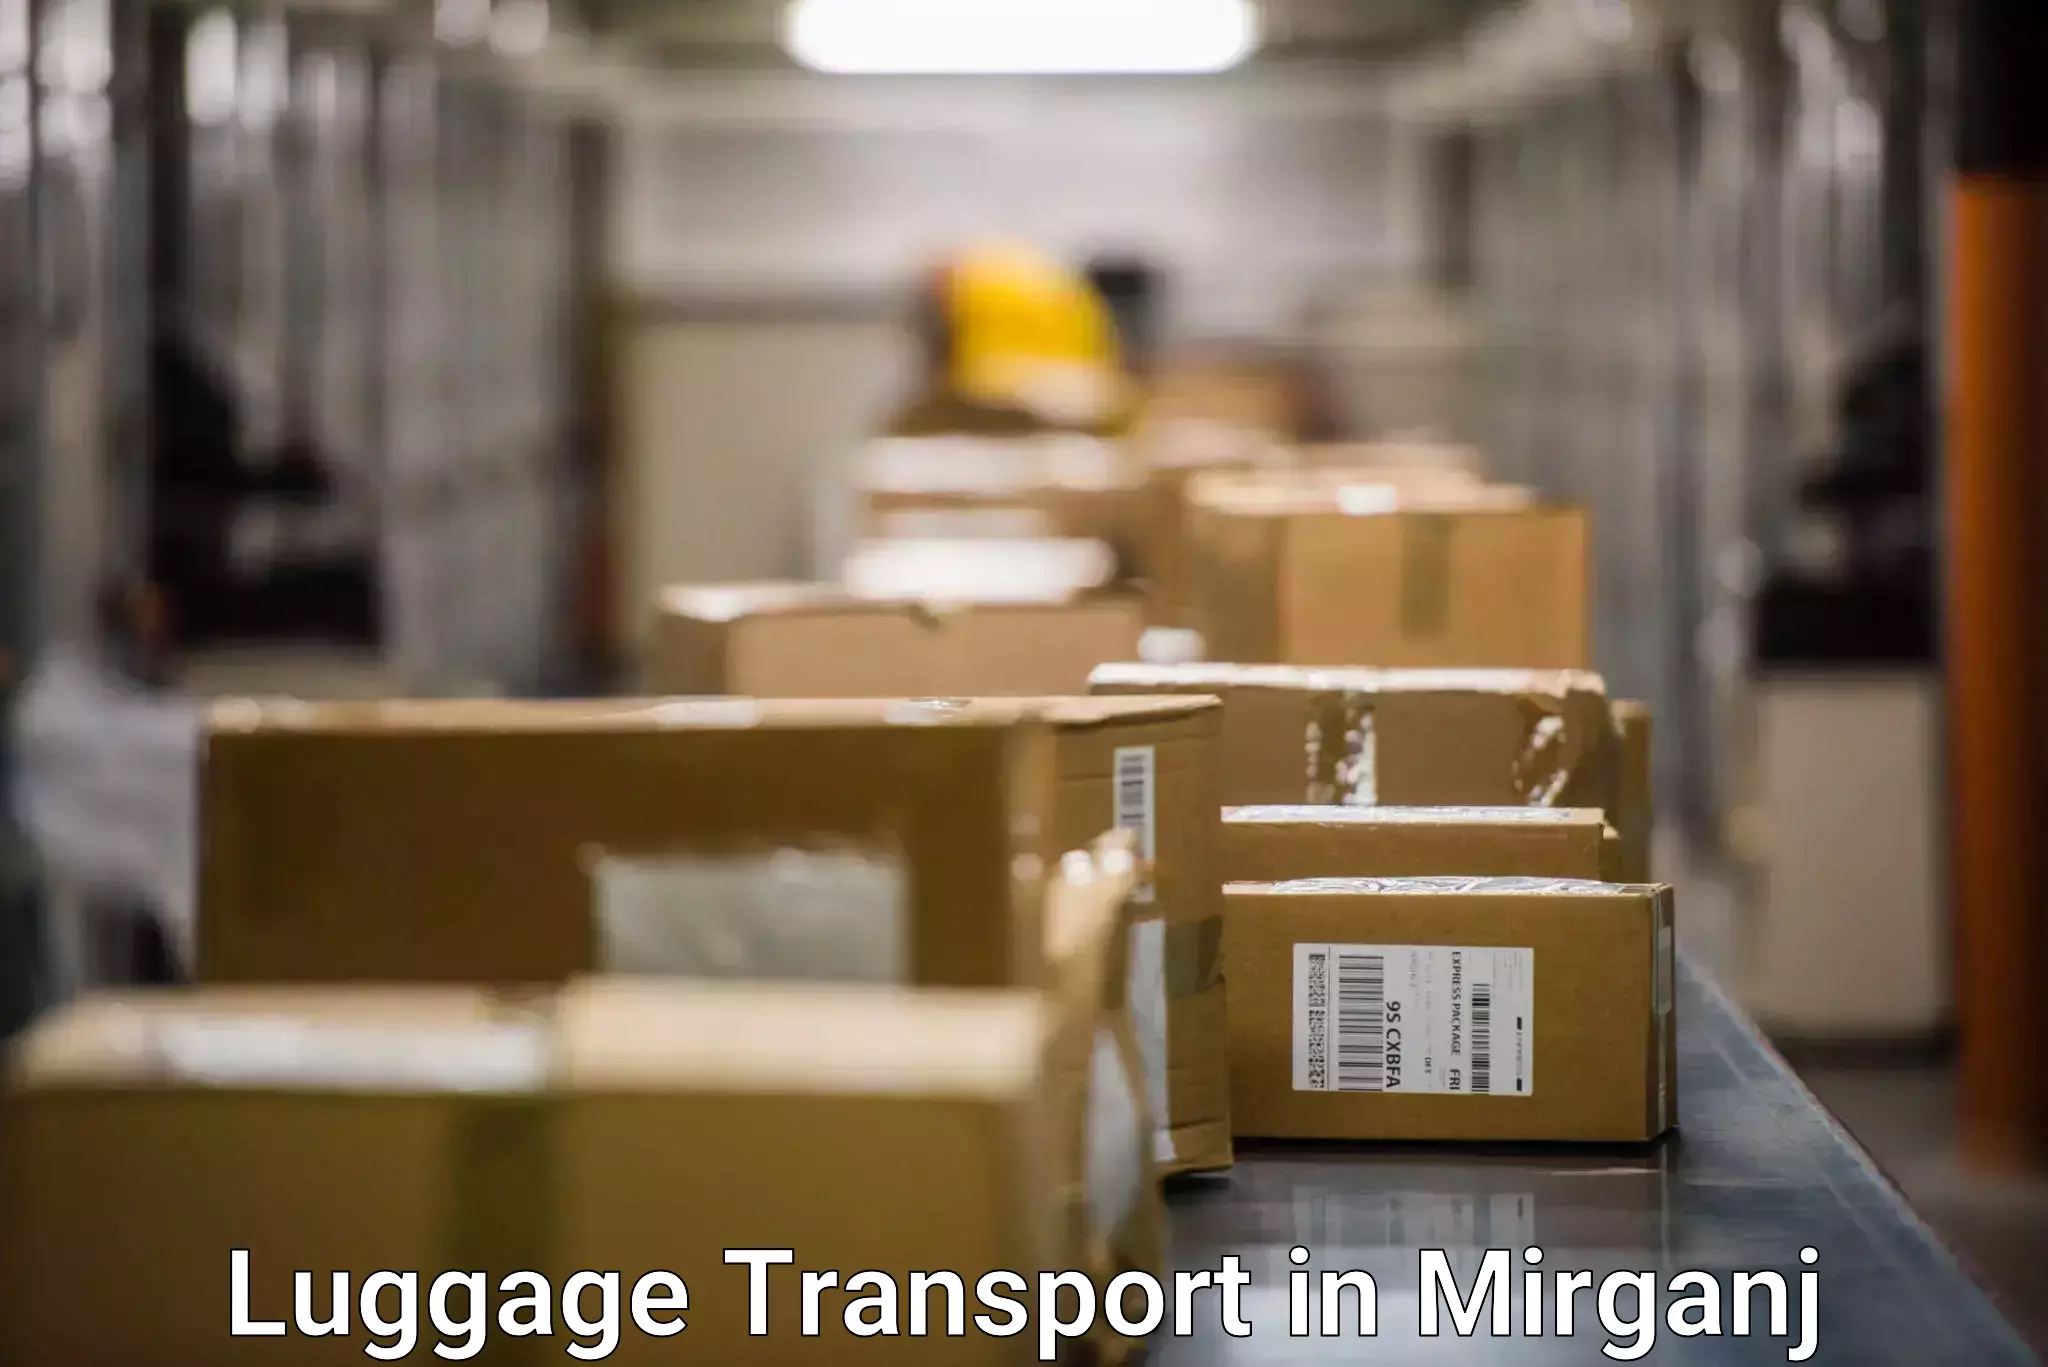 Luggage shipment specialists in Mirganj